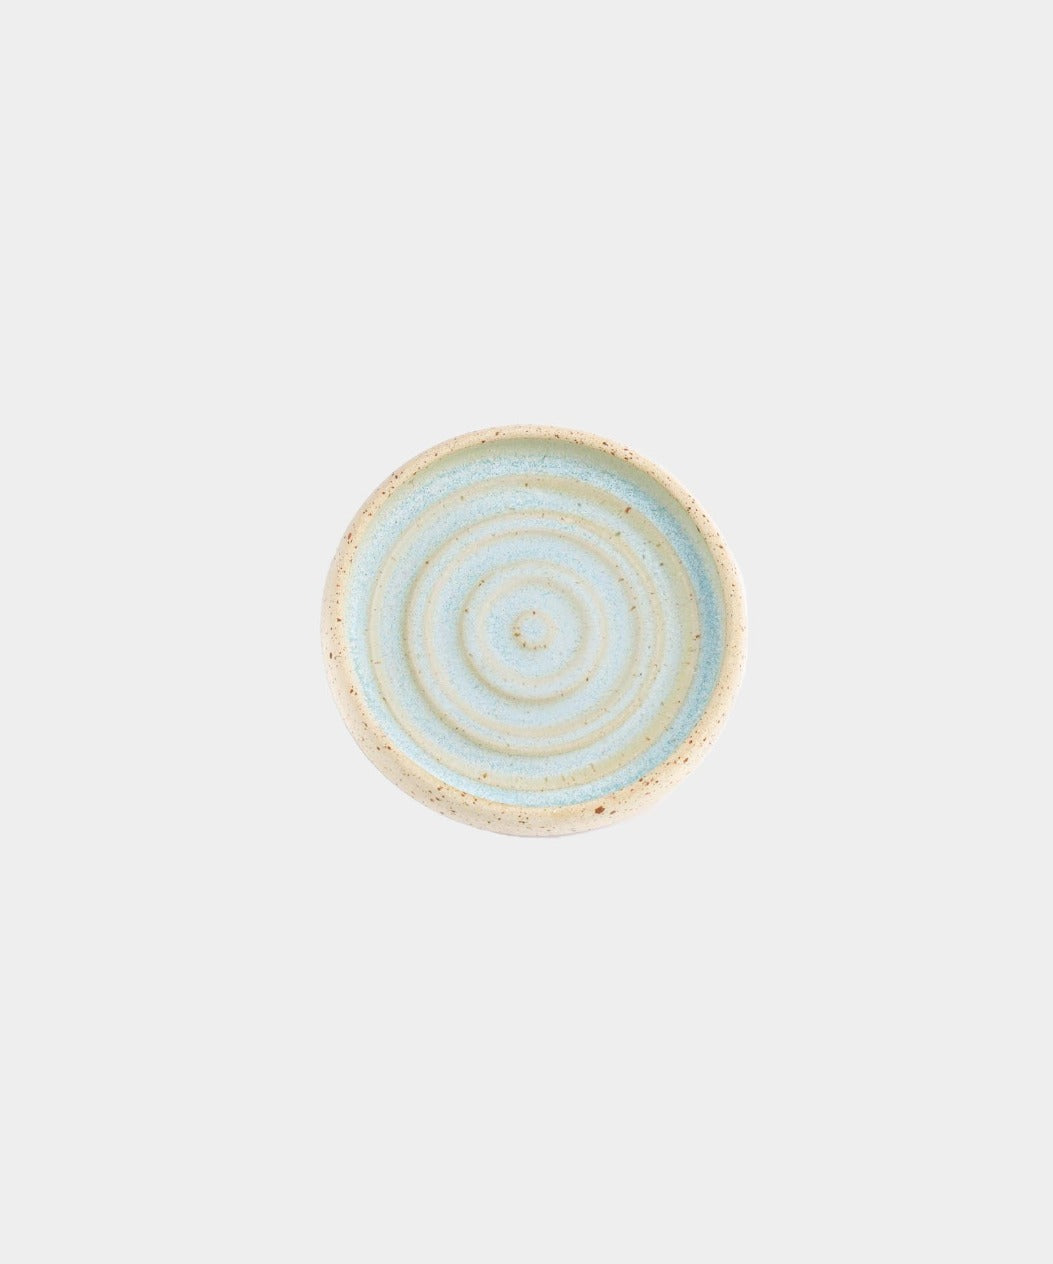 Håndlavet Keramik Sæbeskål | AQUA by Vang | Kerama